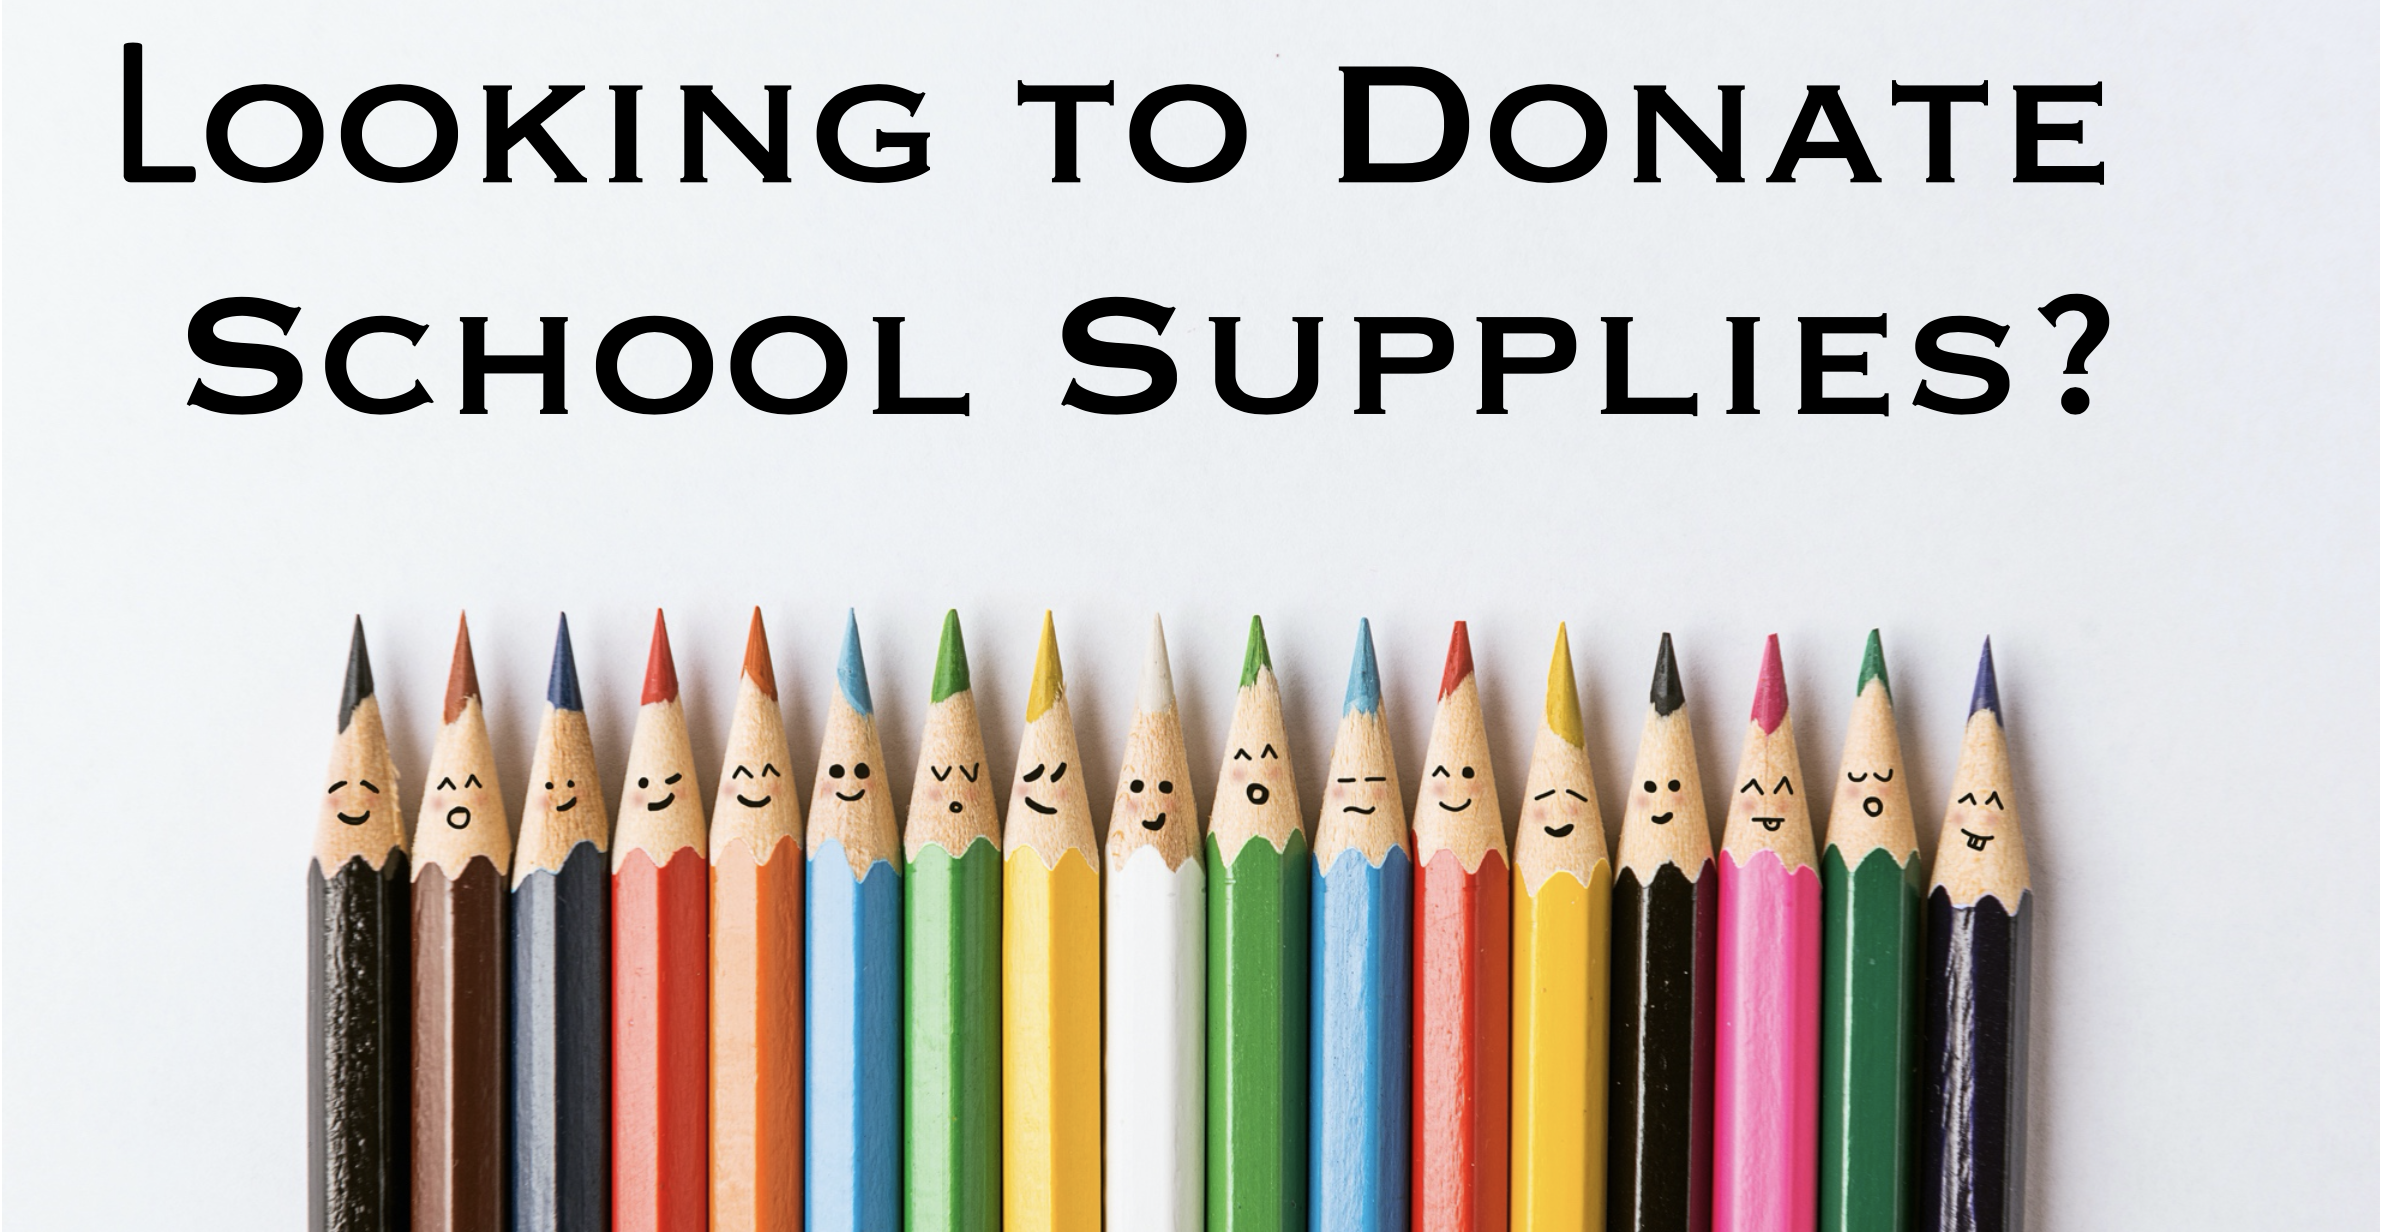 School Supply Donations